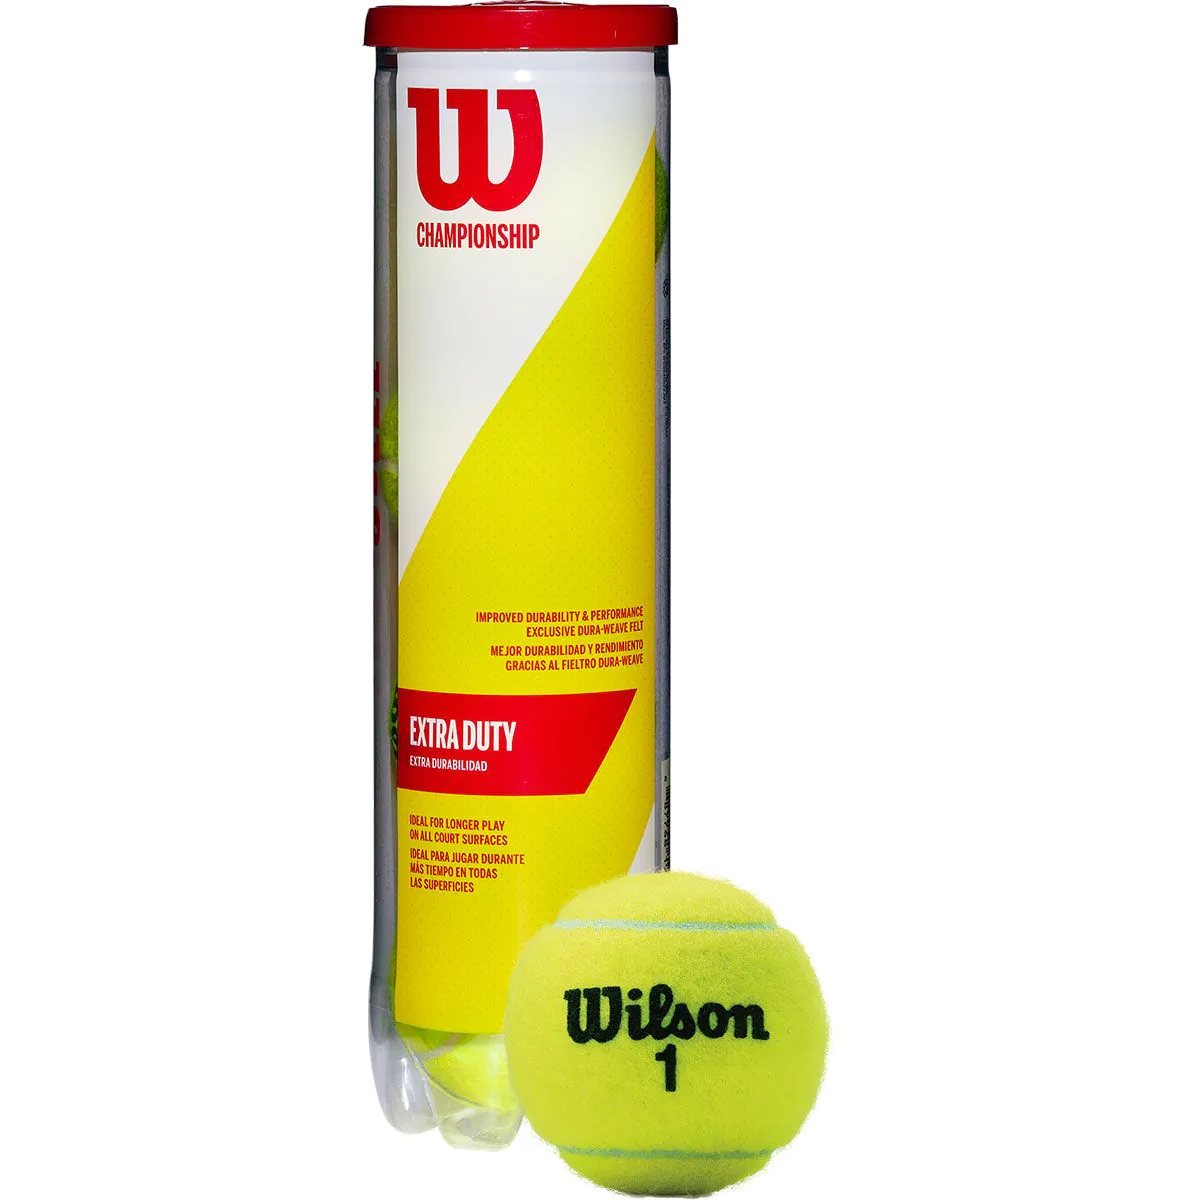 Wilson Extra-Duty Championship Tennis Balls